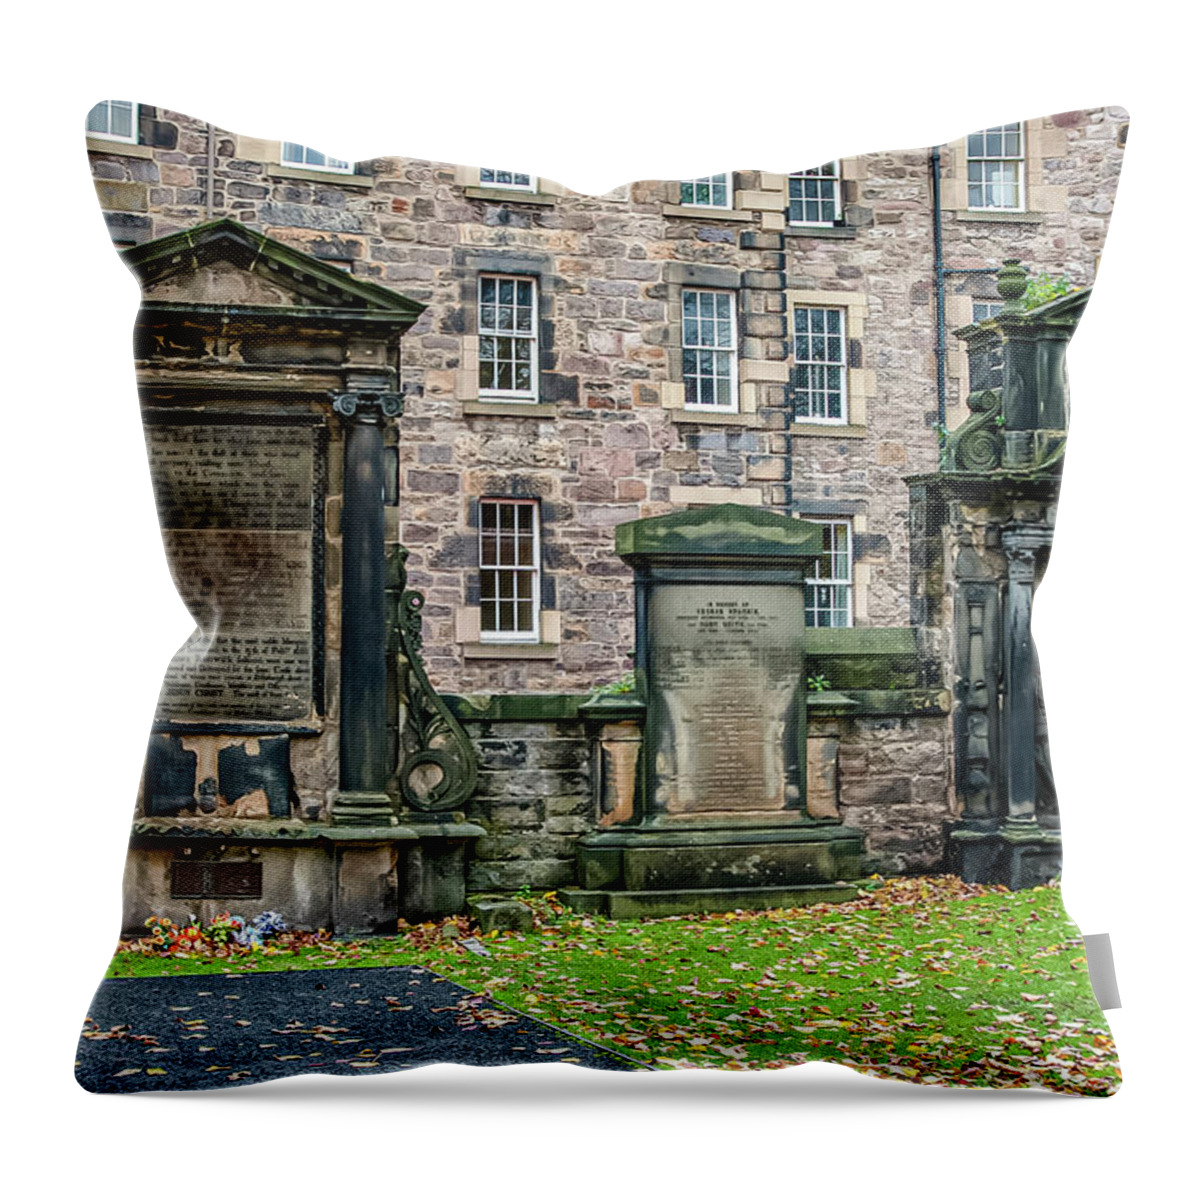 City Of Edinburgh Throw Pillow featuring the digital art City of Edinburgh Scotland - ancient cemetary by SnapHappy Photos